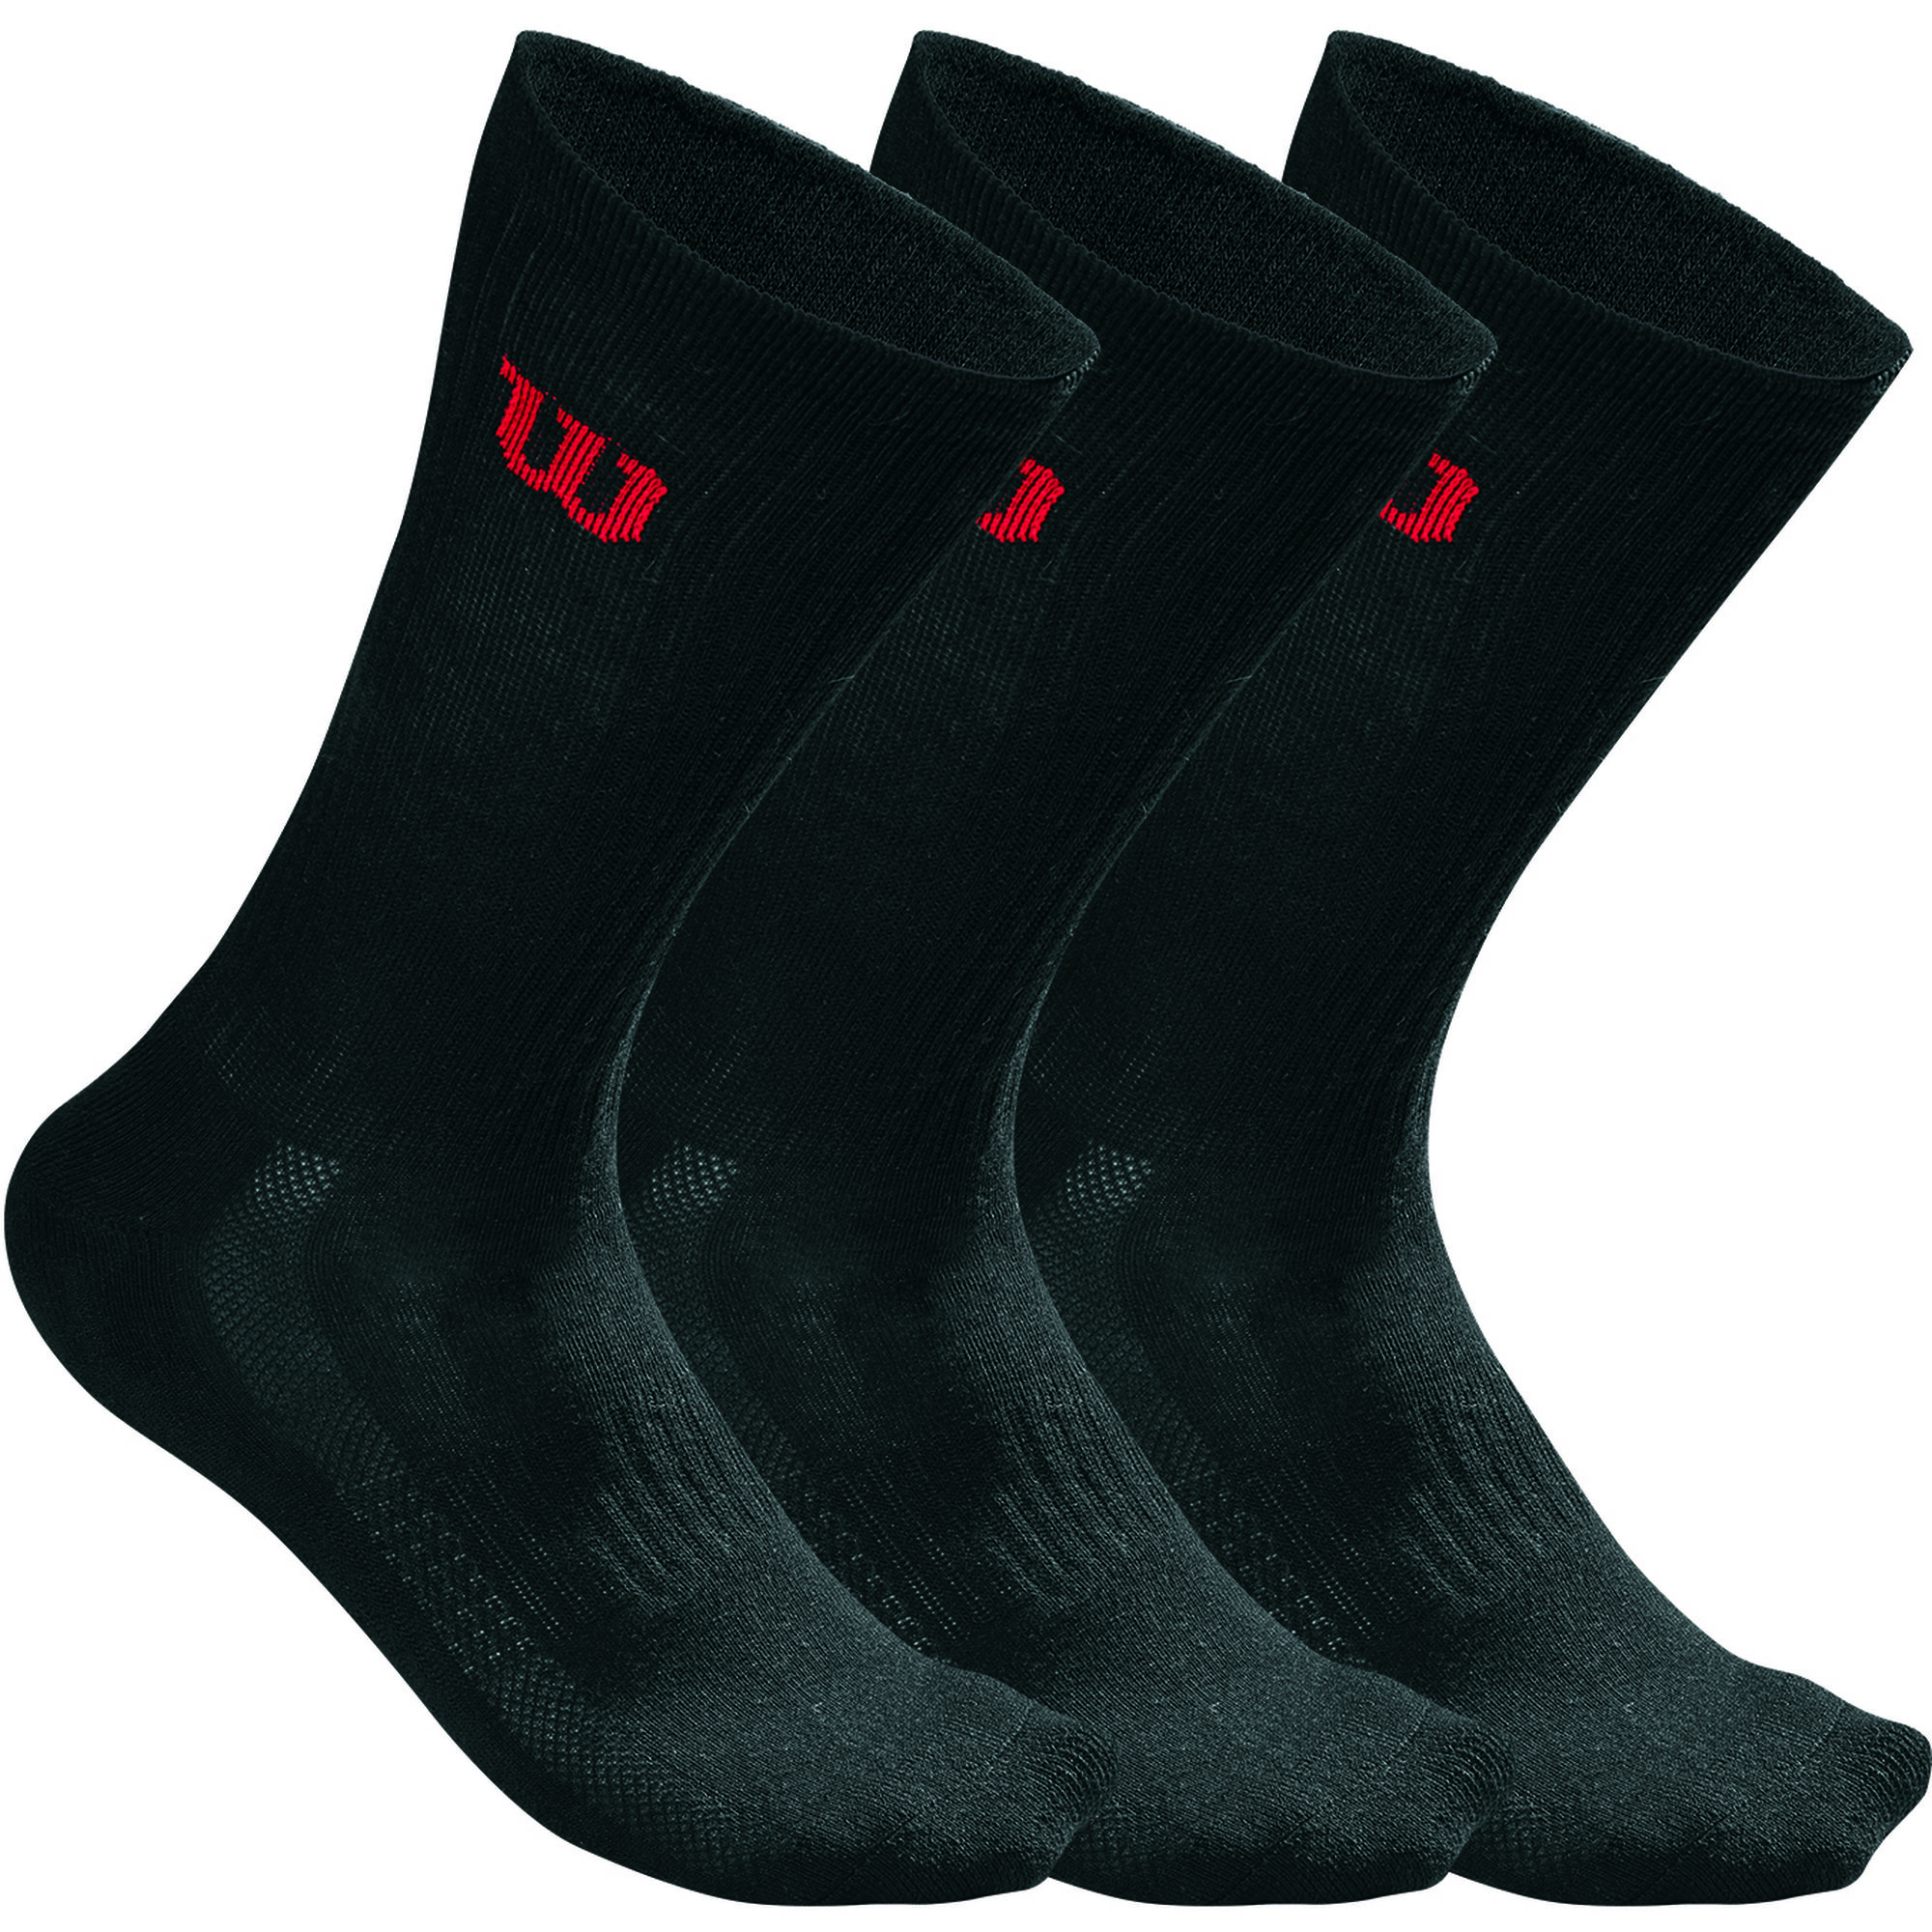 Buy Wilson Crew Tennis Socks 3 Pack Men Black, Red online | Tennis Point UK